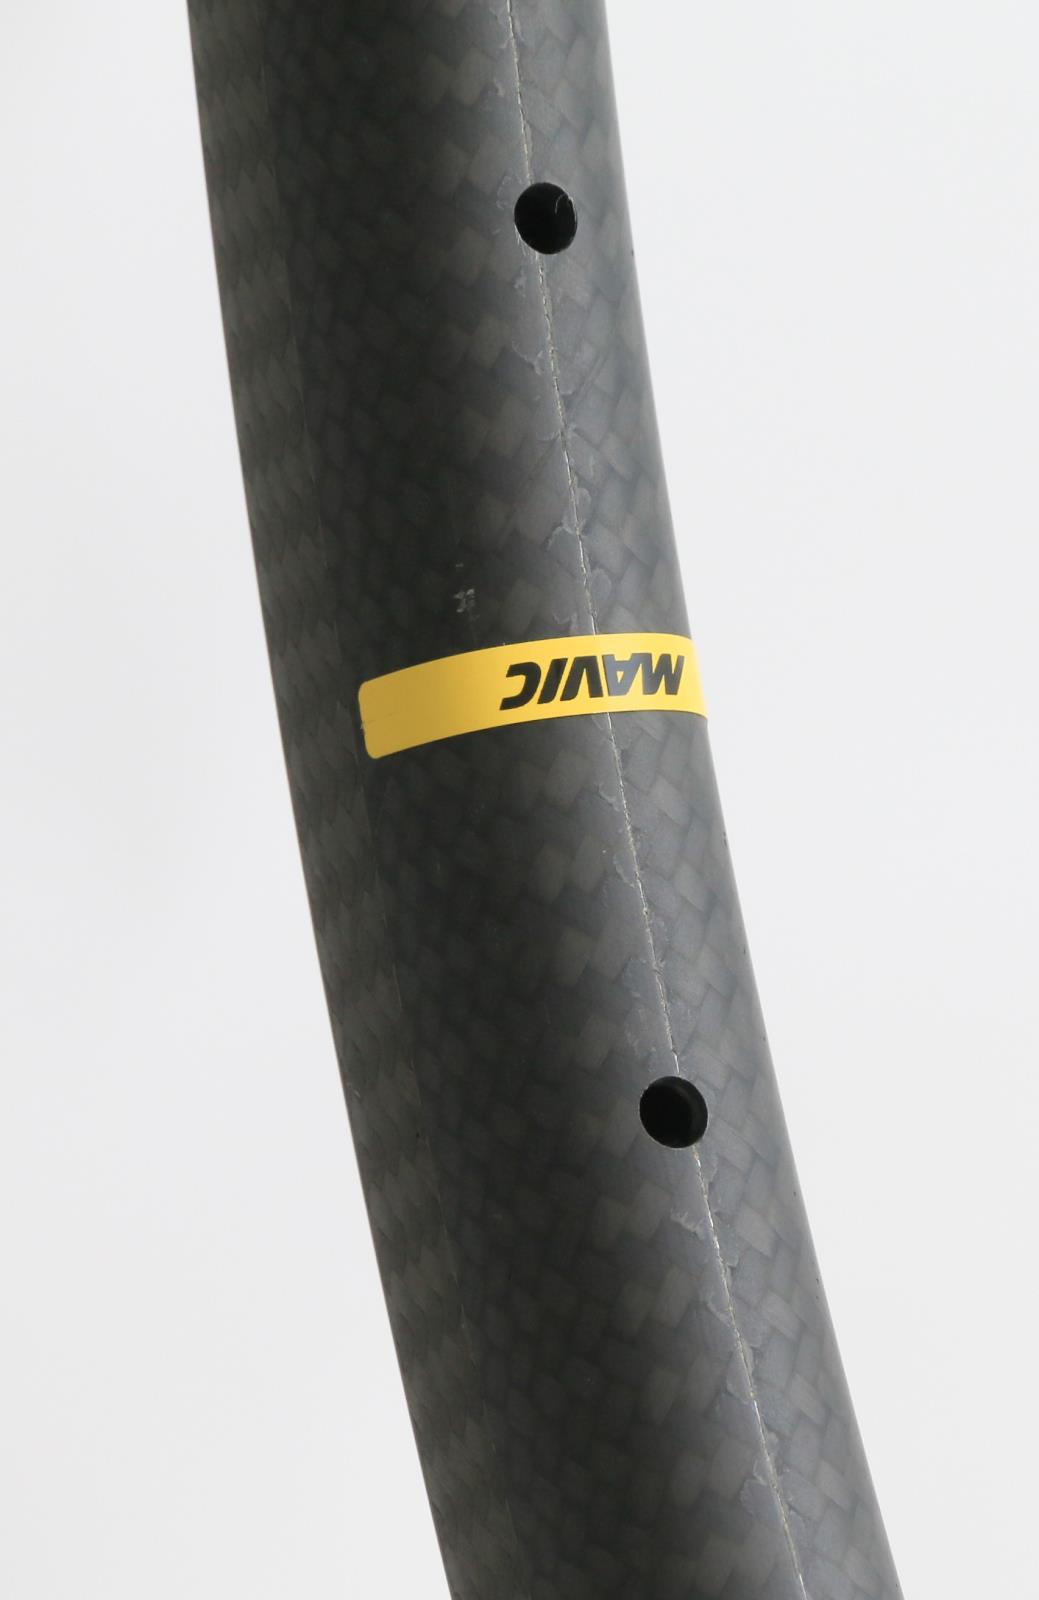 Mavic Open Pro 25 20 Hole Carbon Road Cyclocross Bike Rim UST Tubeless Disc NEW